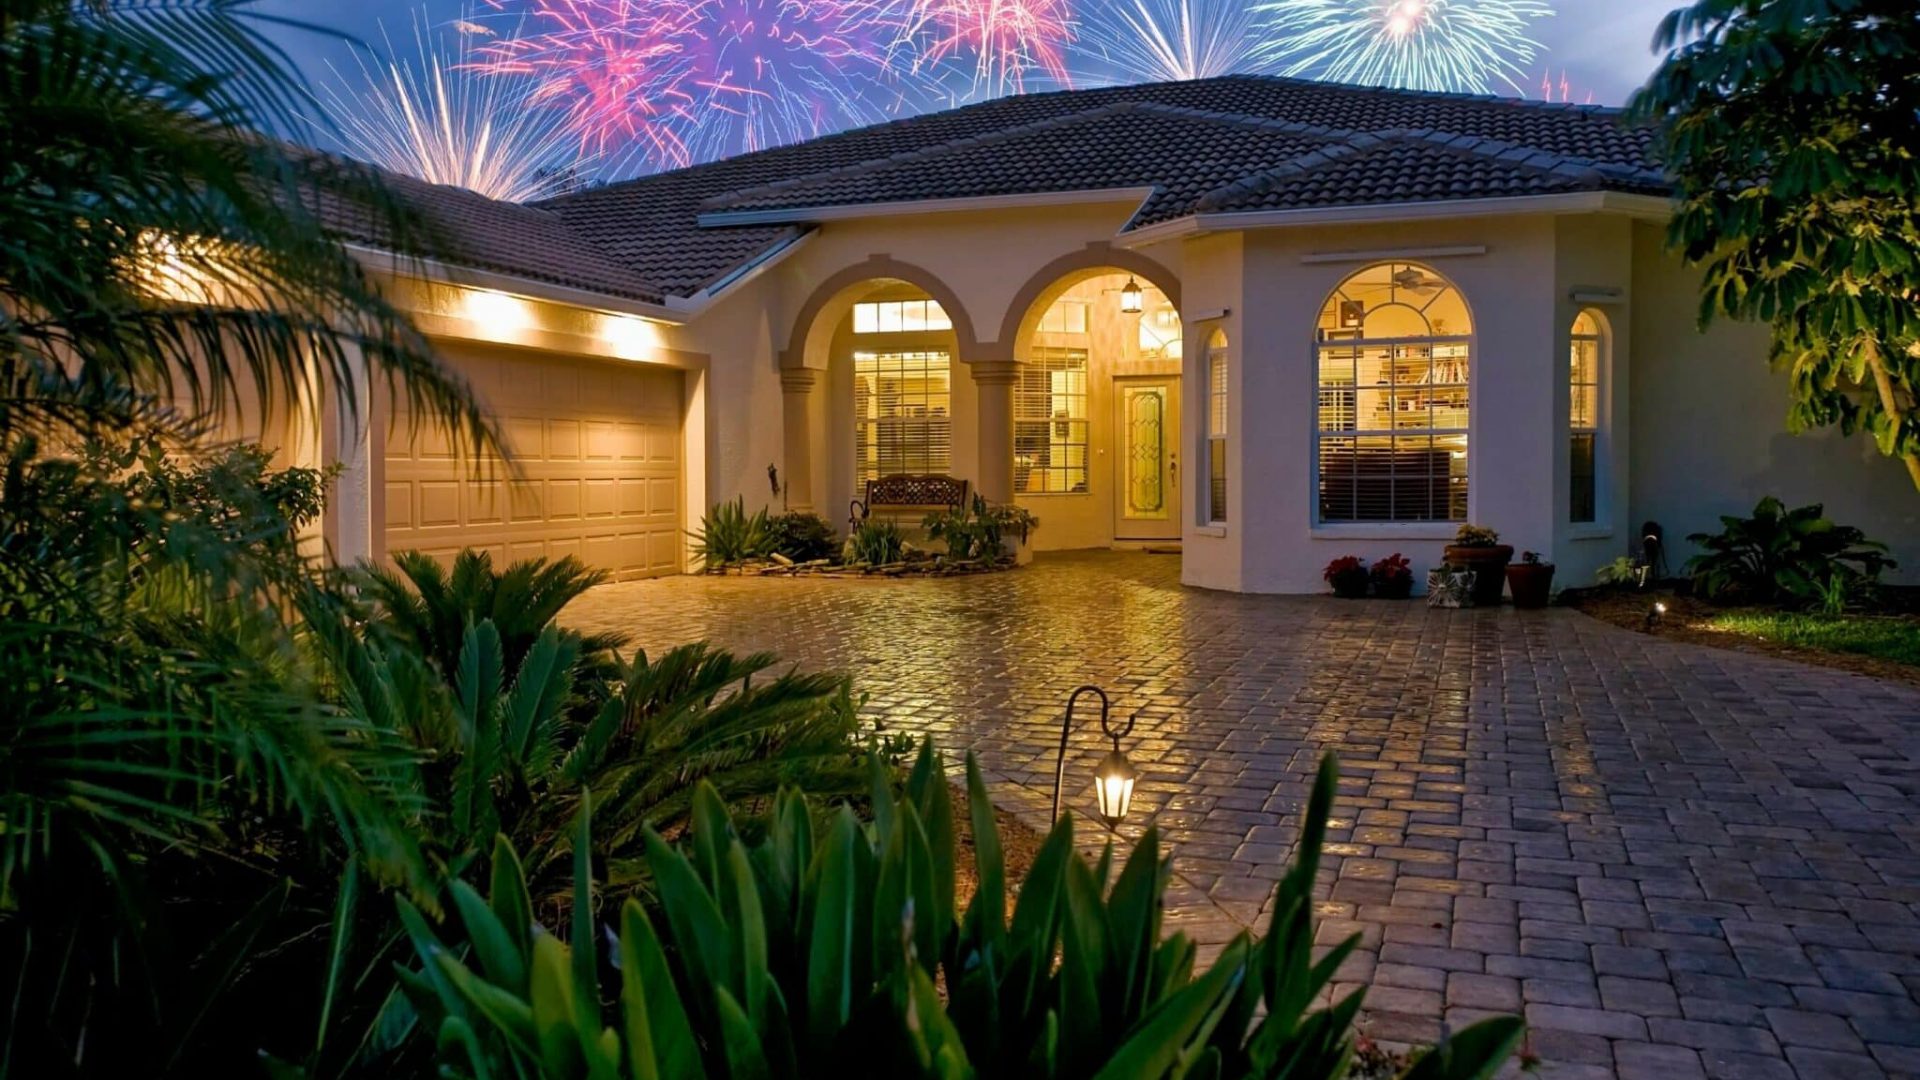 Florida_Home_Fireworks-2